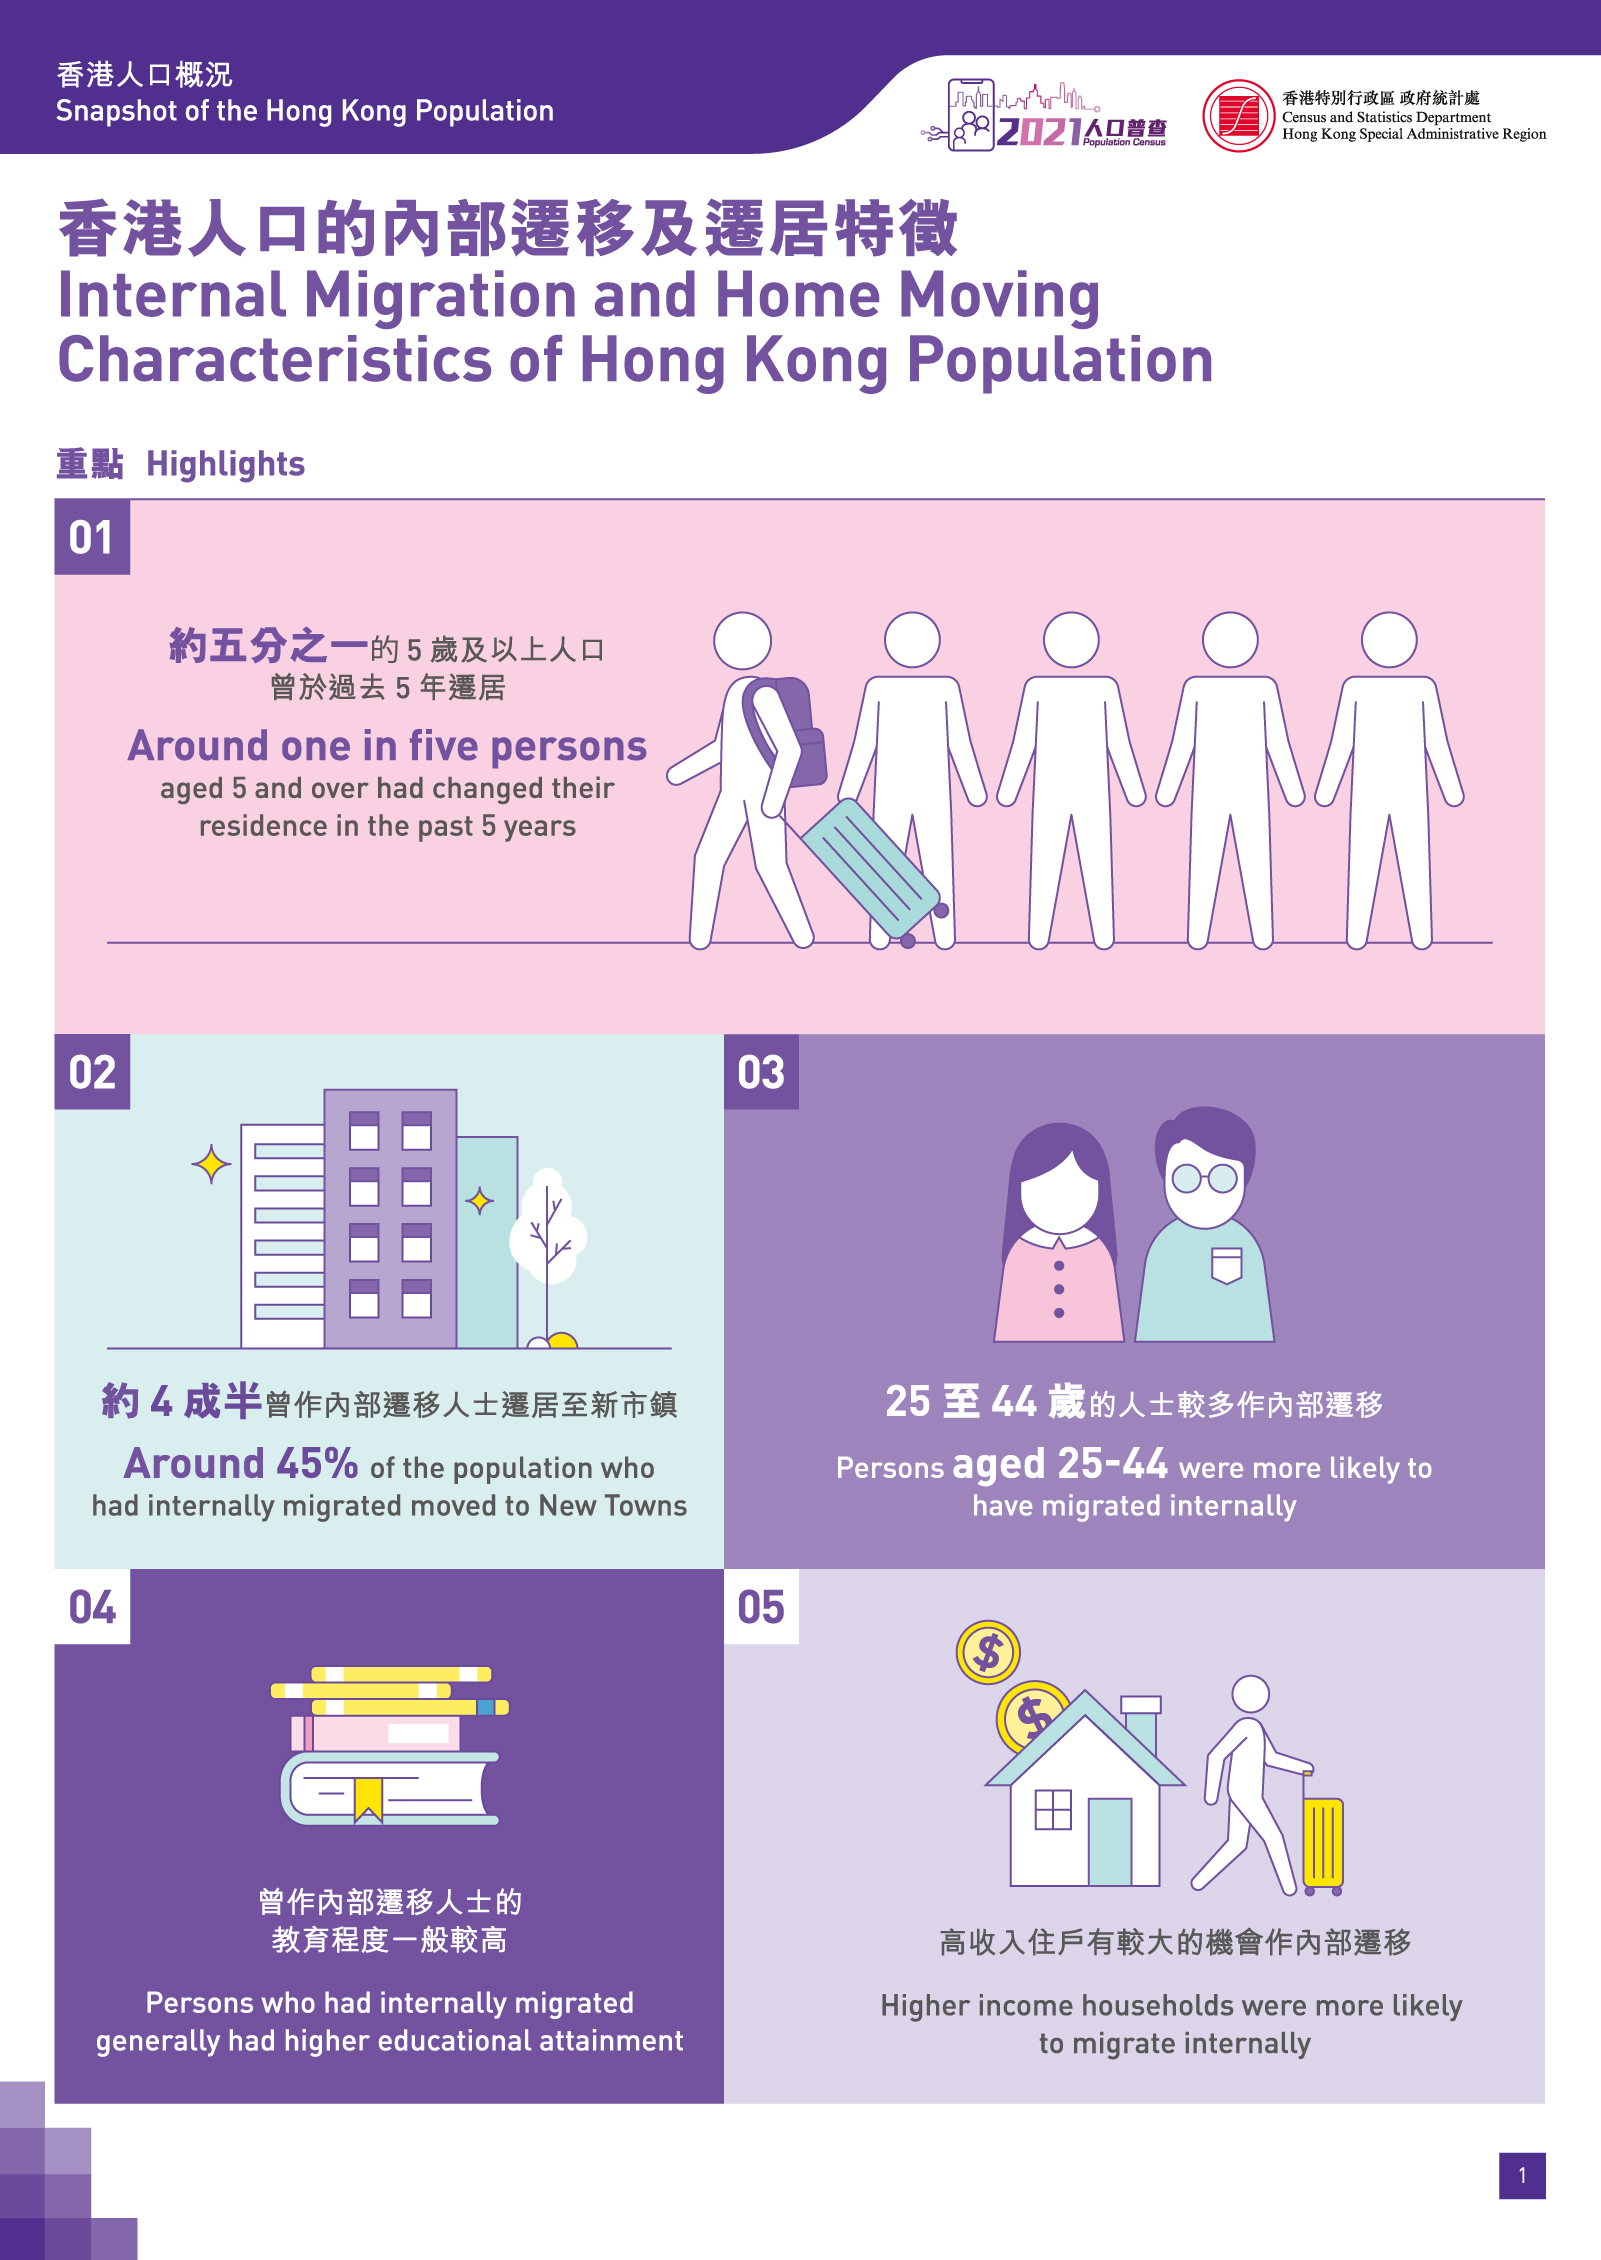 Internal Migration and Home Moving Characteristics of Hong Kong Population